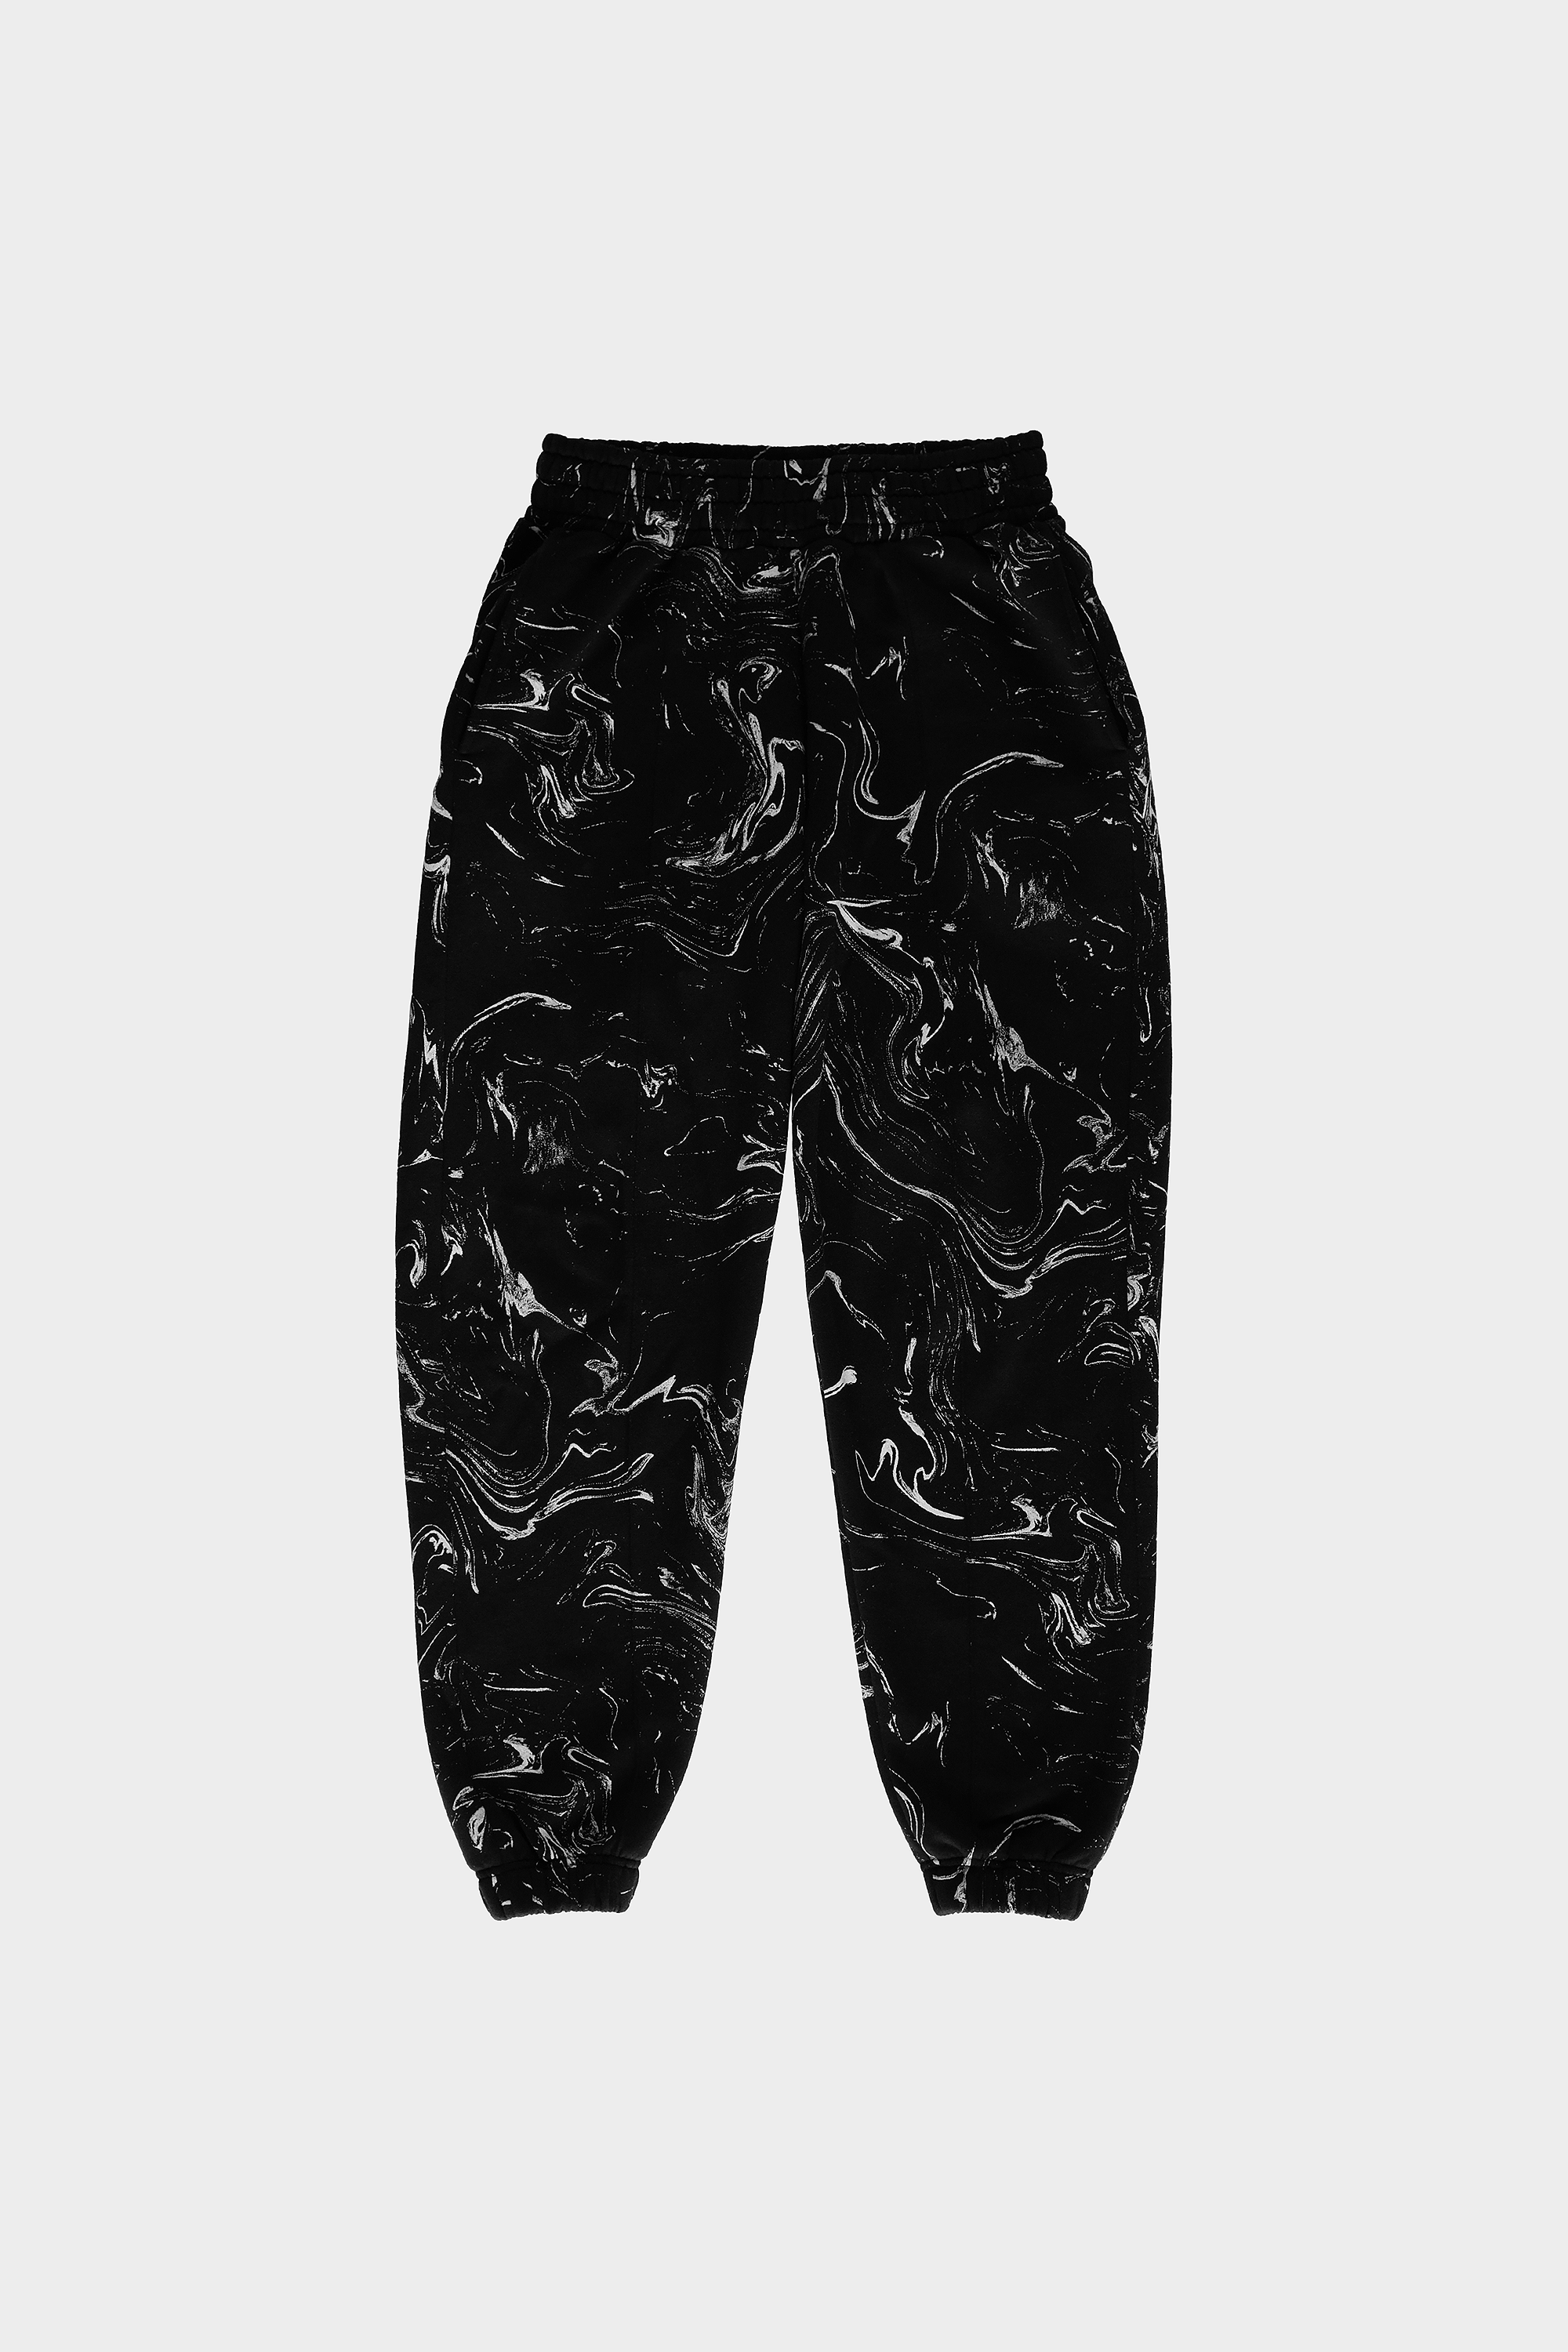 Marble Sweatpants — Black